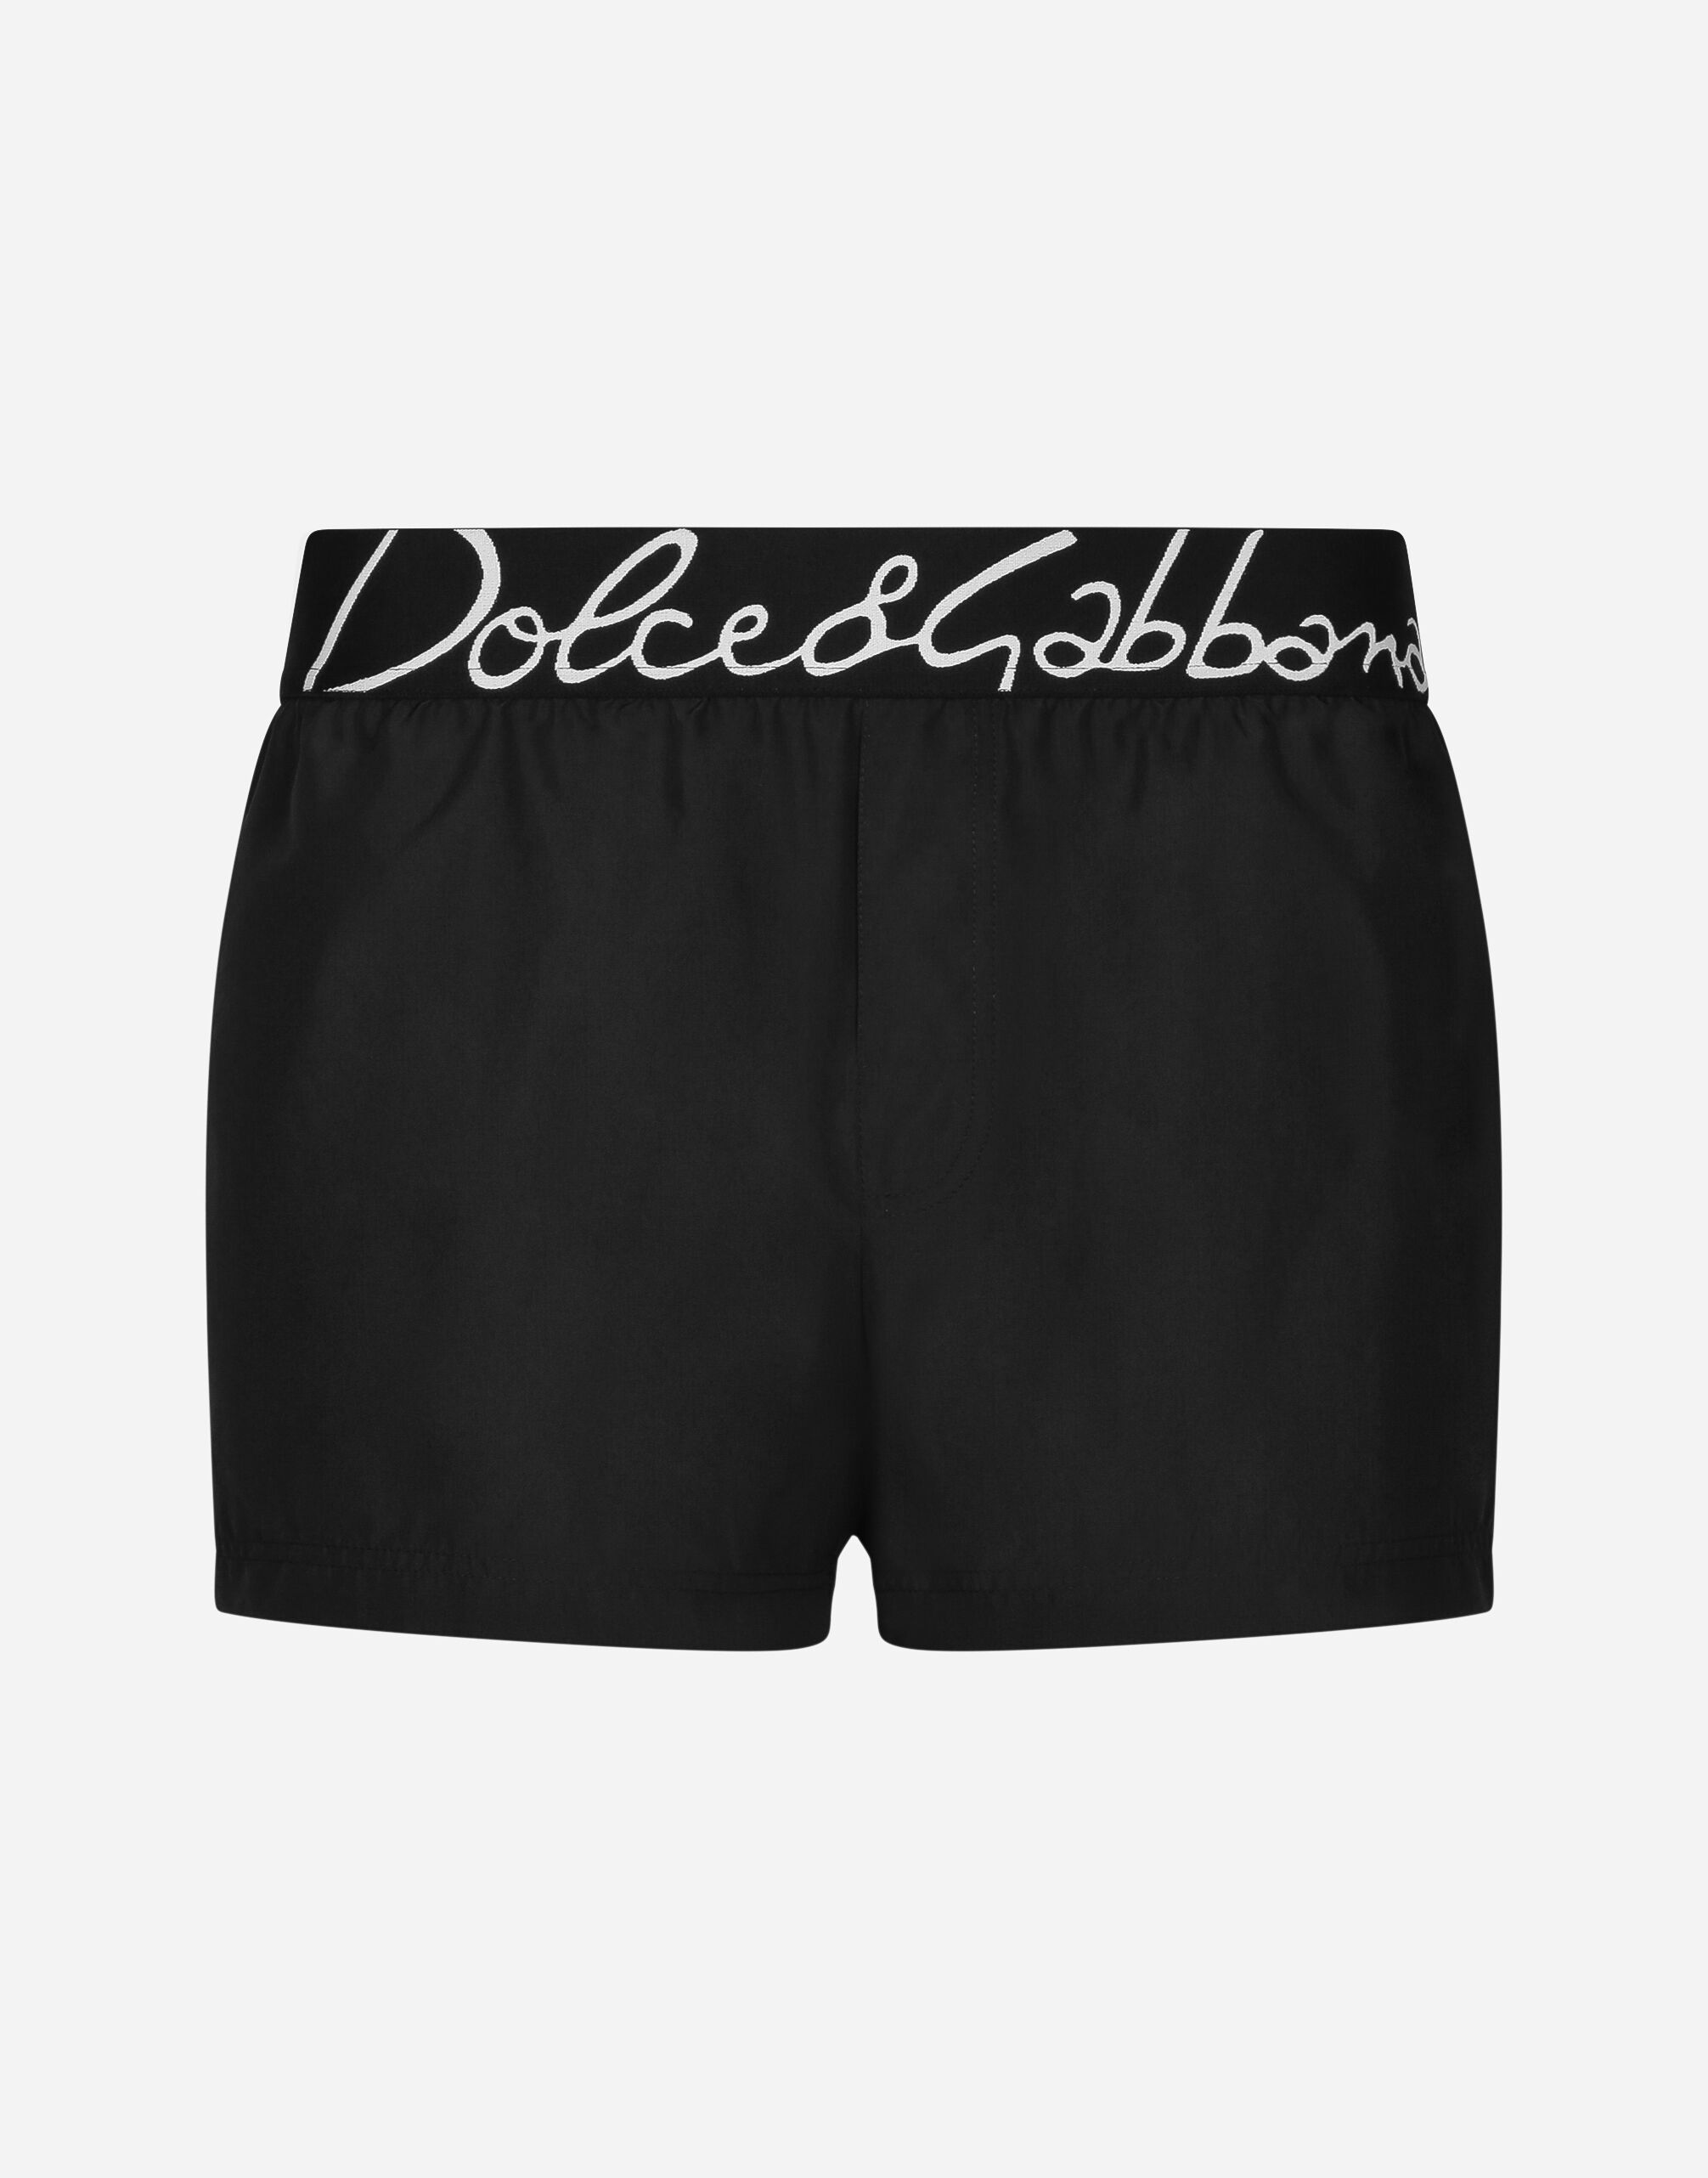 Dolce & Gabbana Logo Band Swim Shorts Green/Black/White Men's